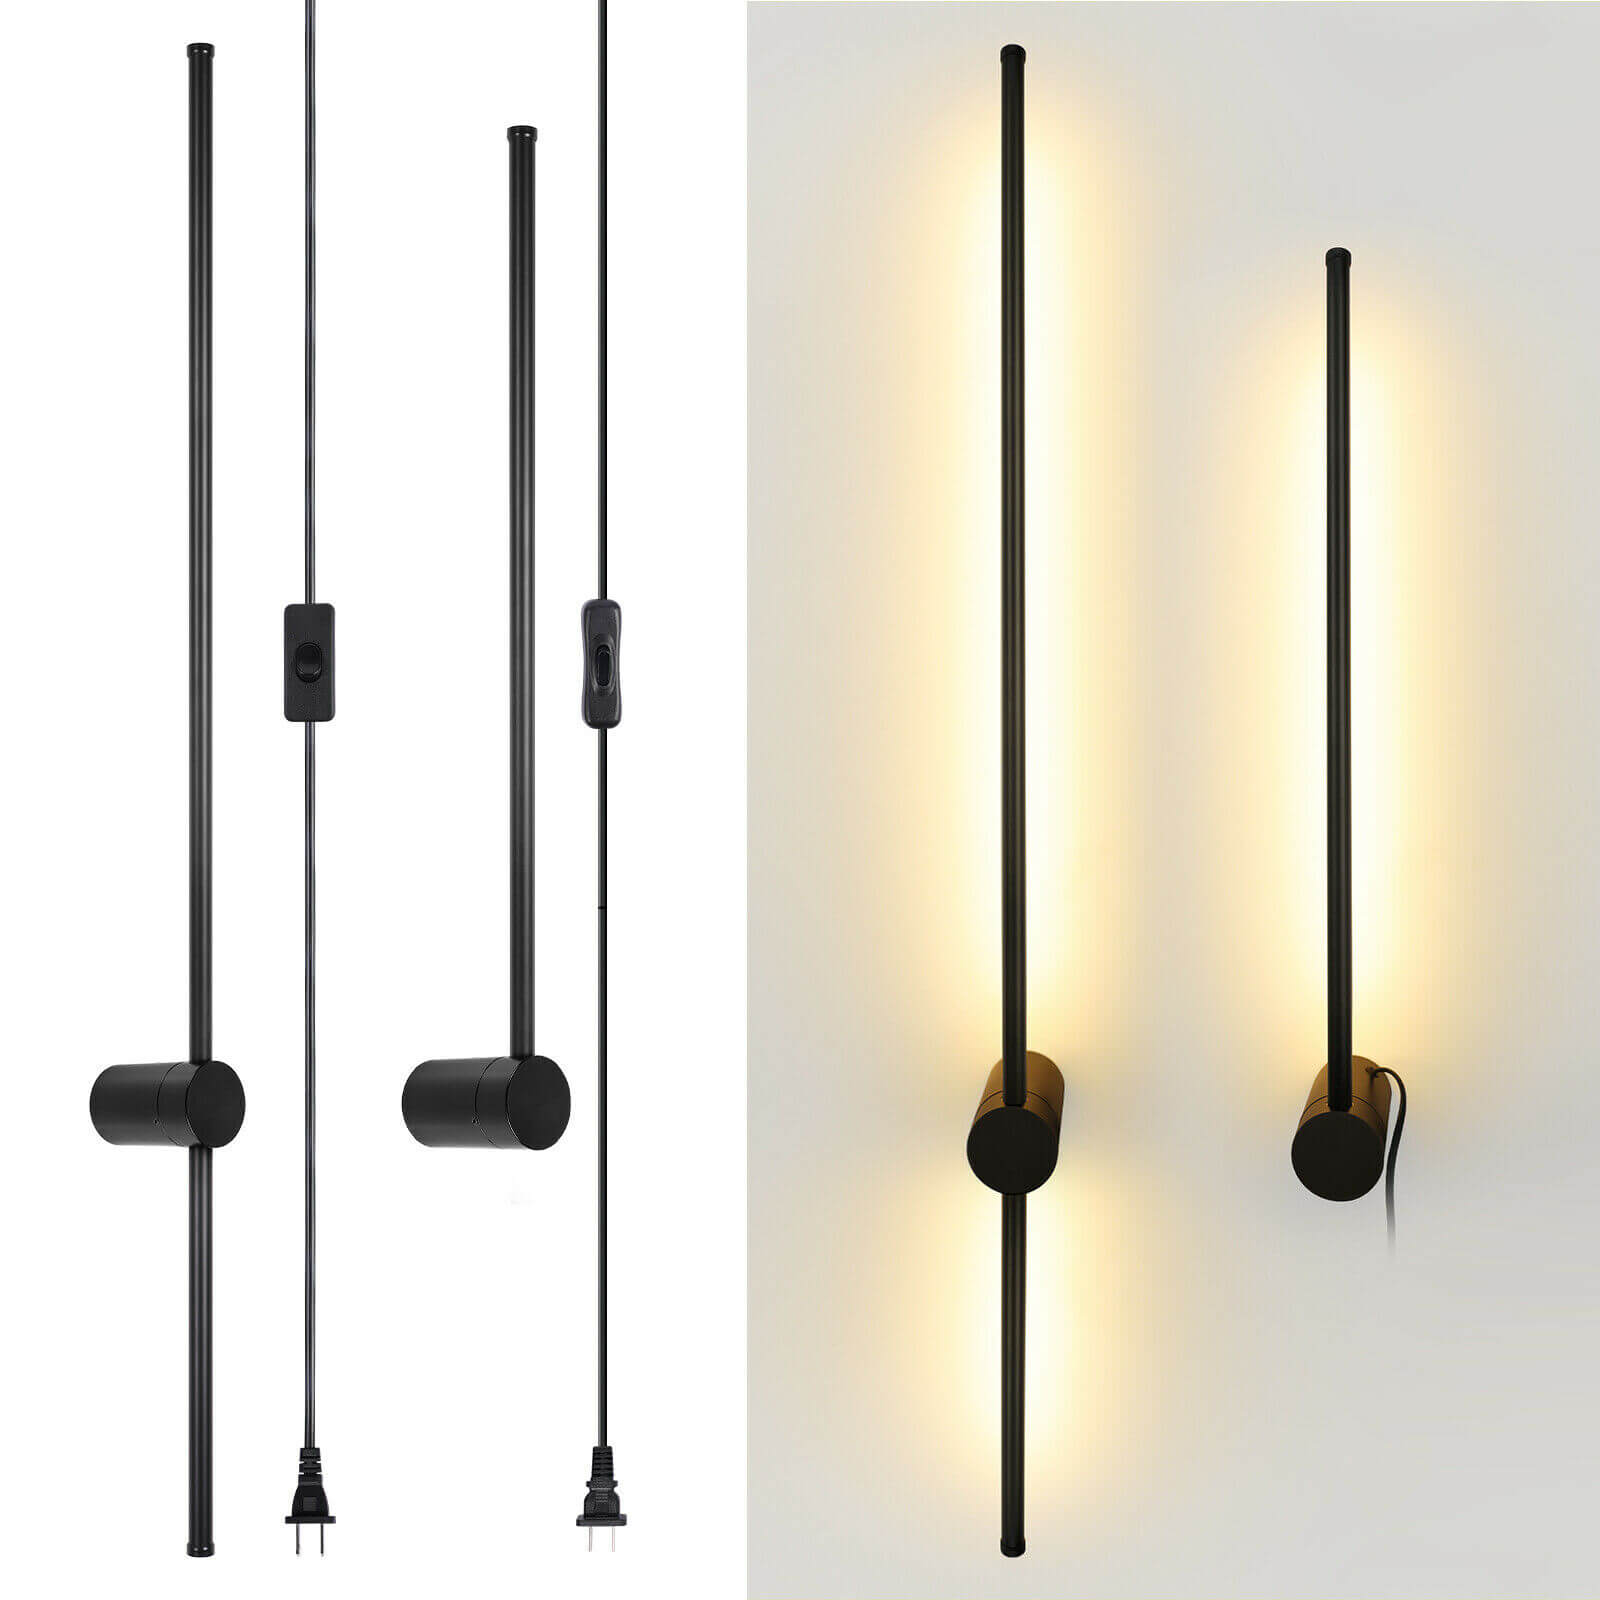 Display of Modern LED Black Linear Wall Lamp